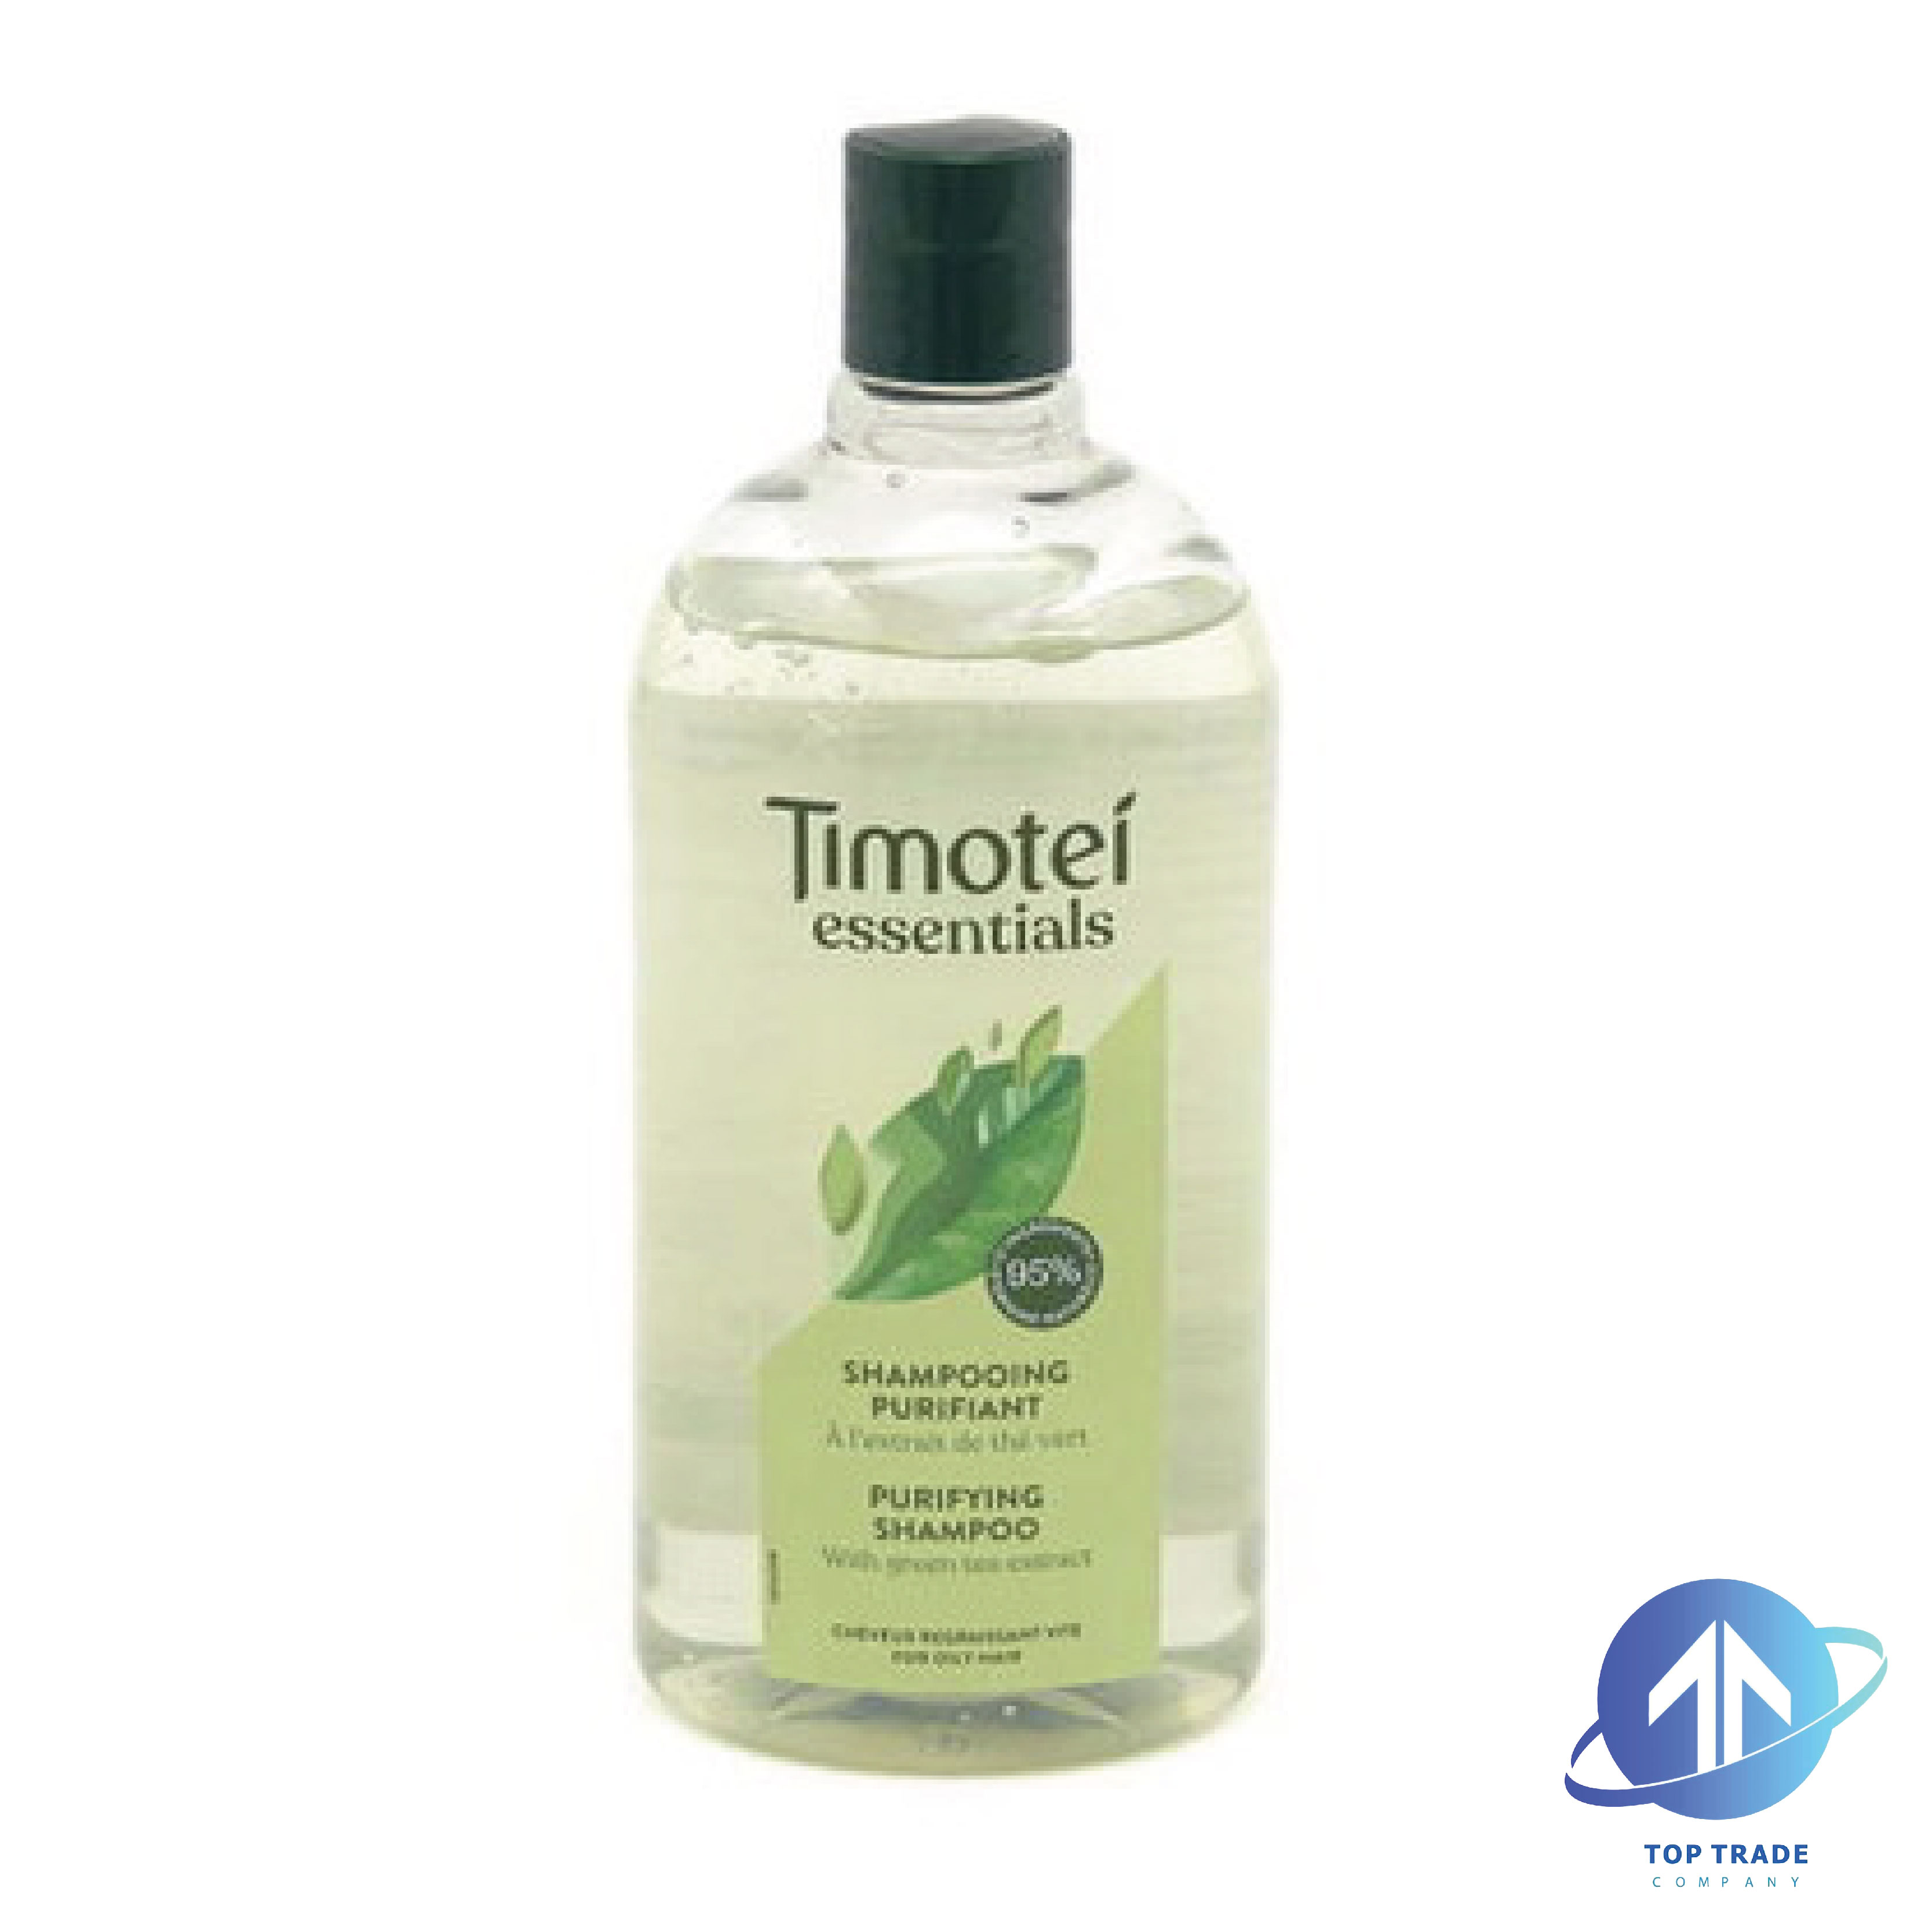 Timotei shampoo Purifying with green tea extract 750ml